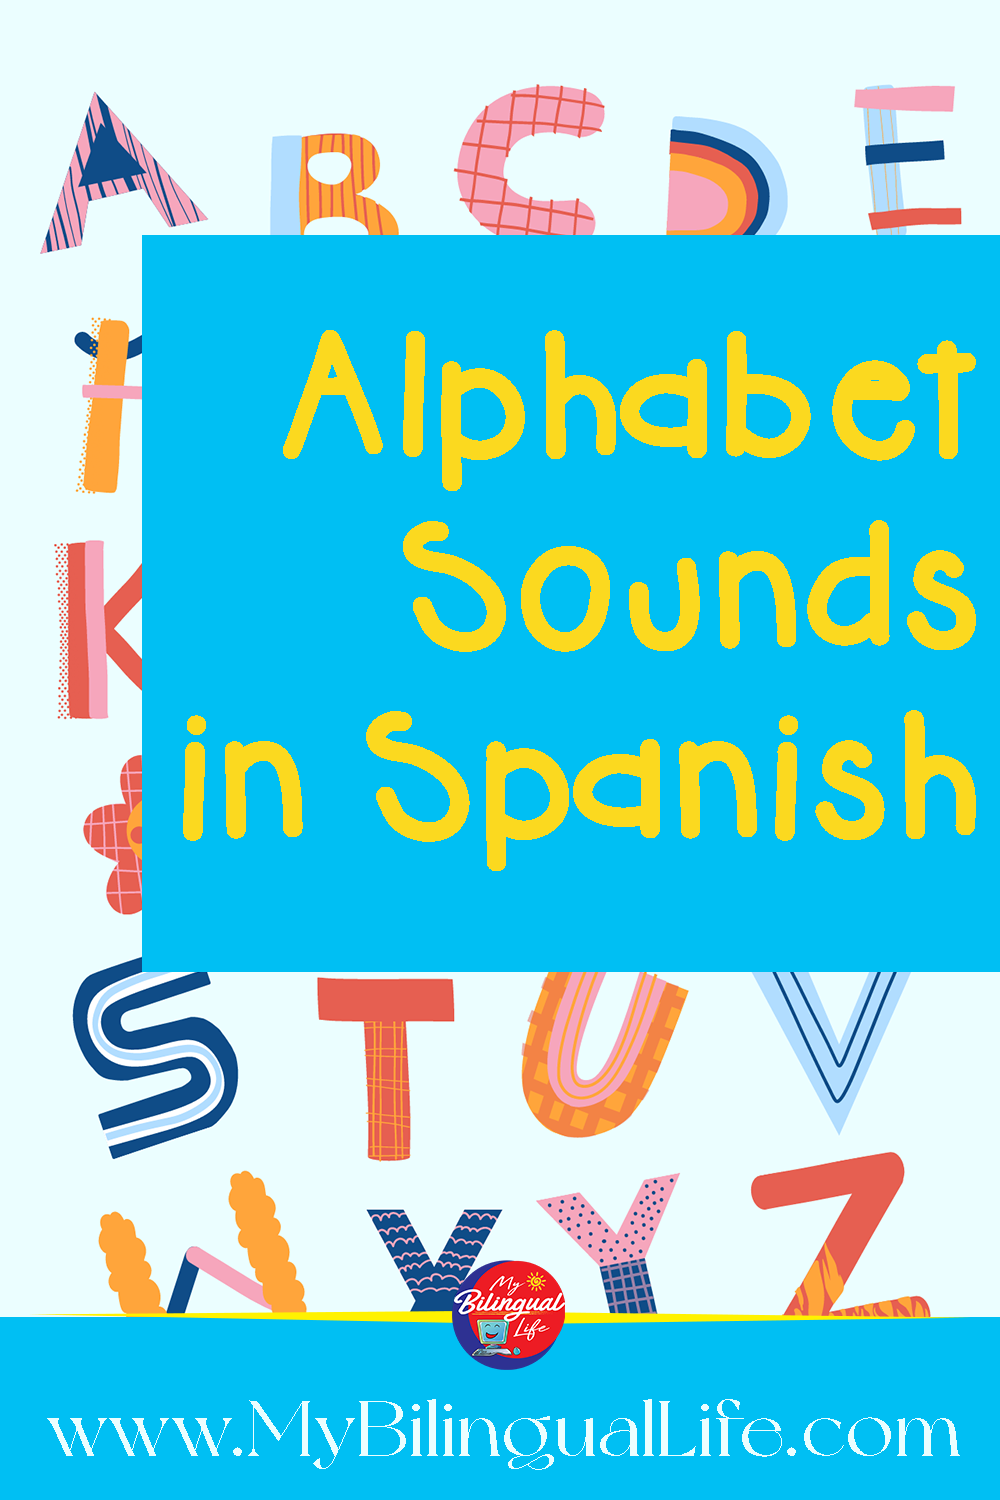 spanish letter sounds